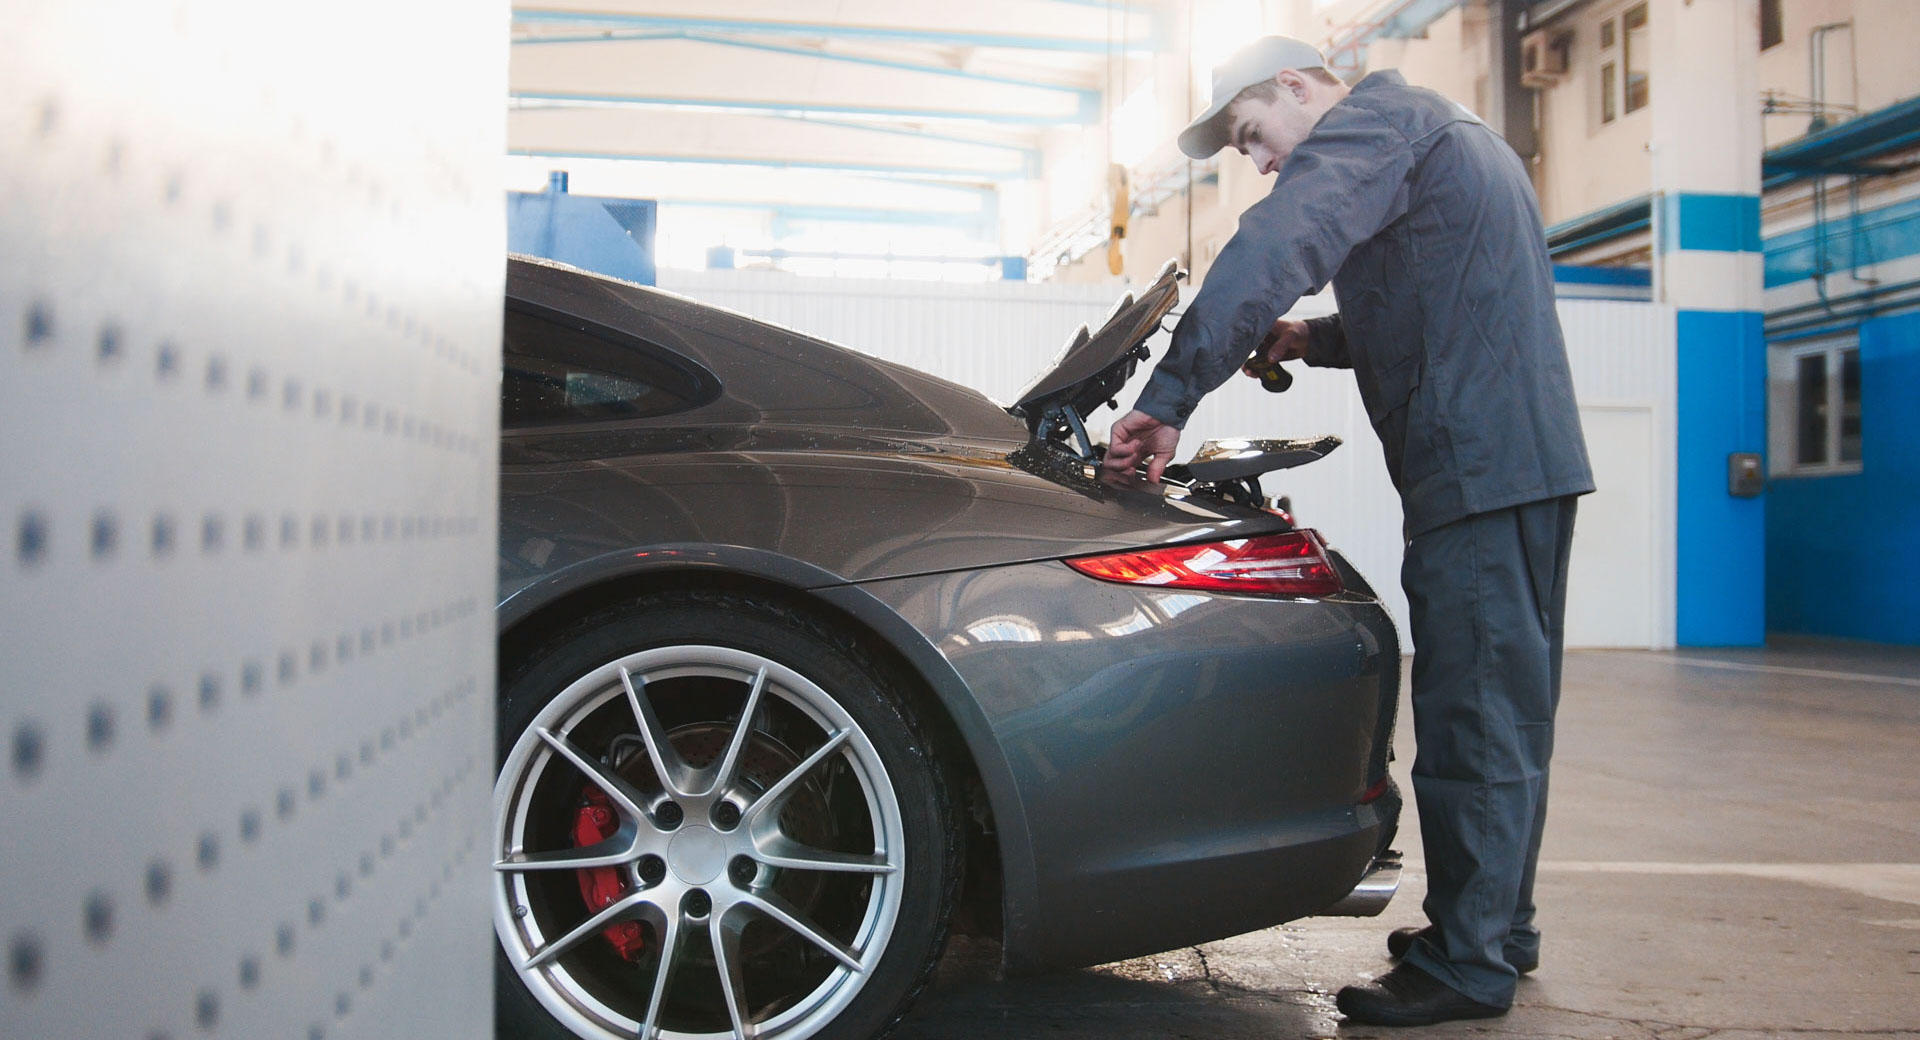 Porsche is most valuable luxury brand, Press Release